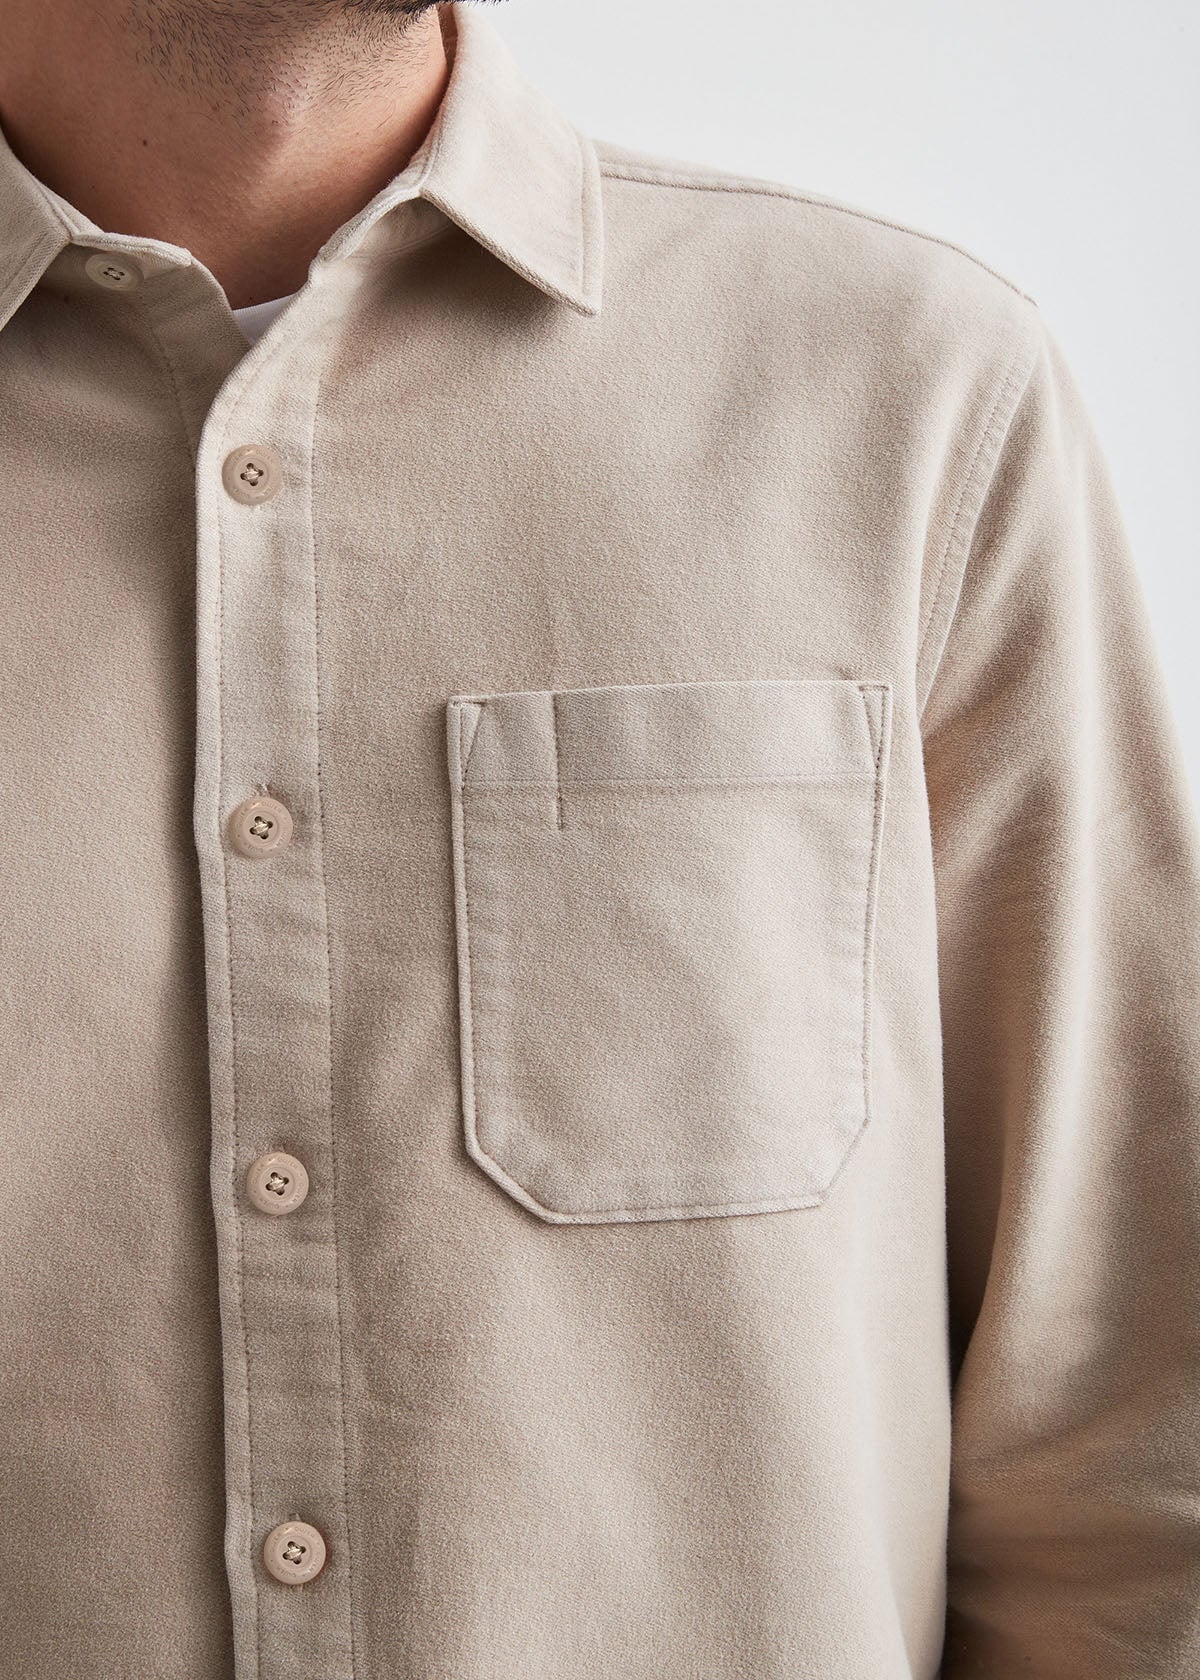 mens khaki brown relaxed moleskin button up shirt button and pocket detail